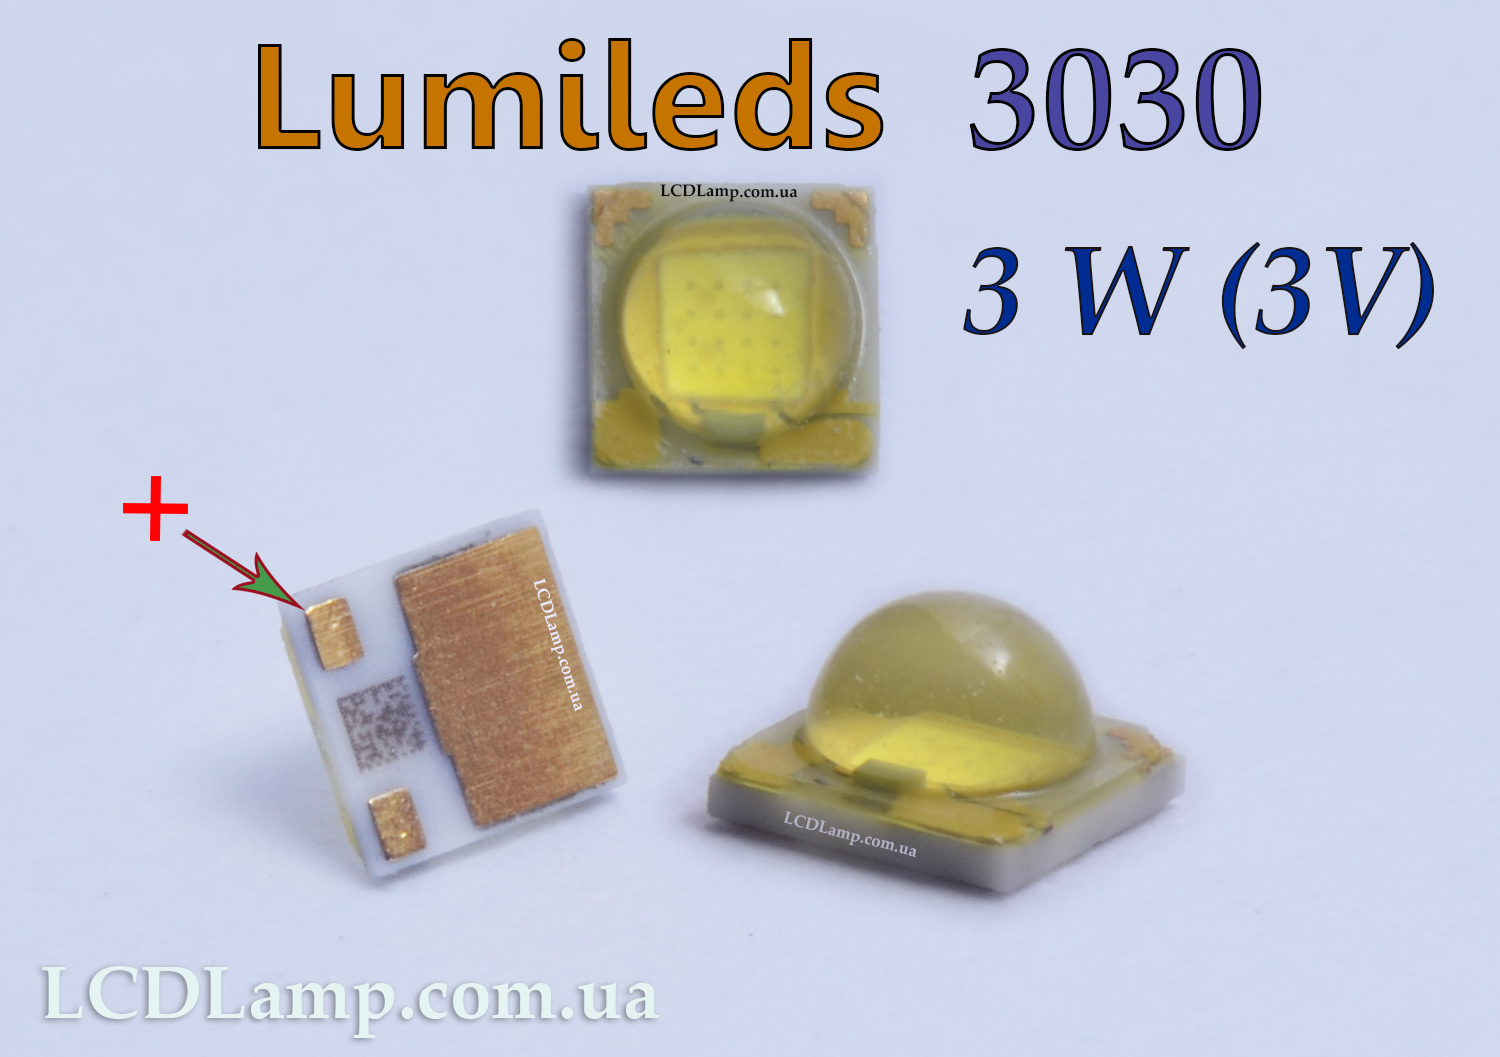 Lumileds 3030